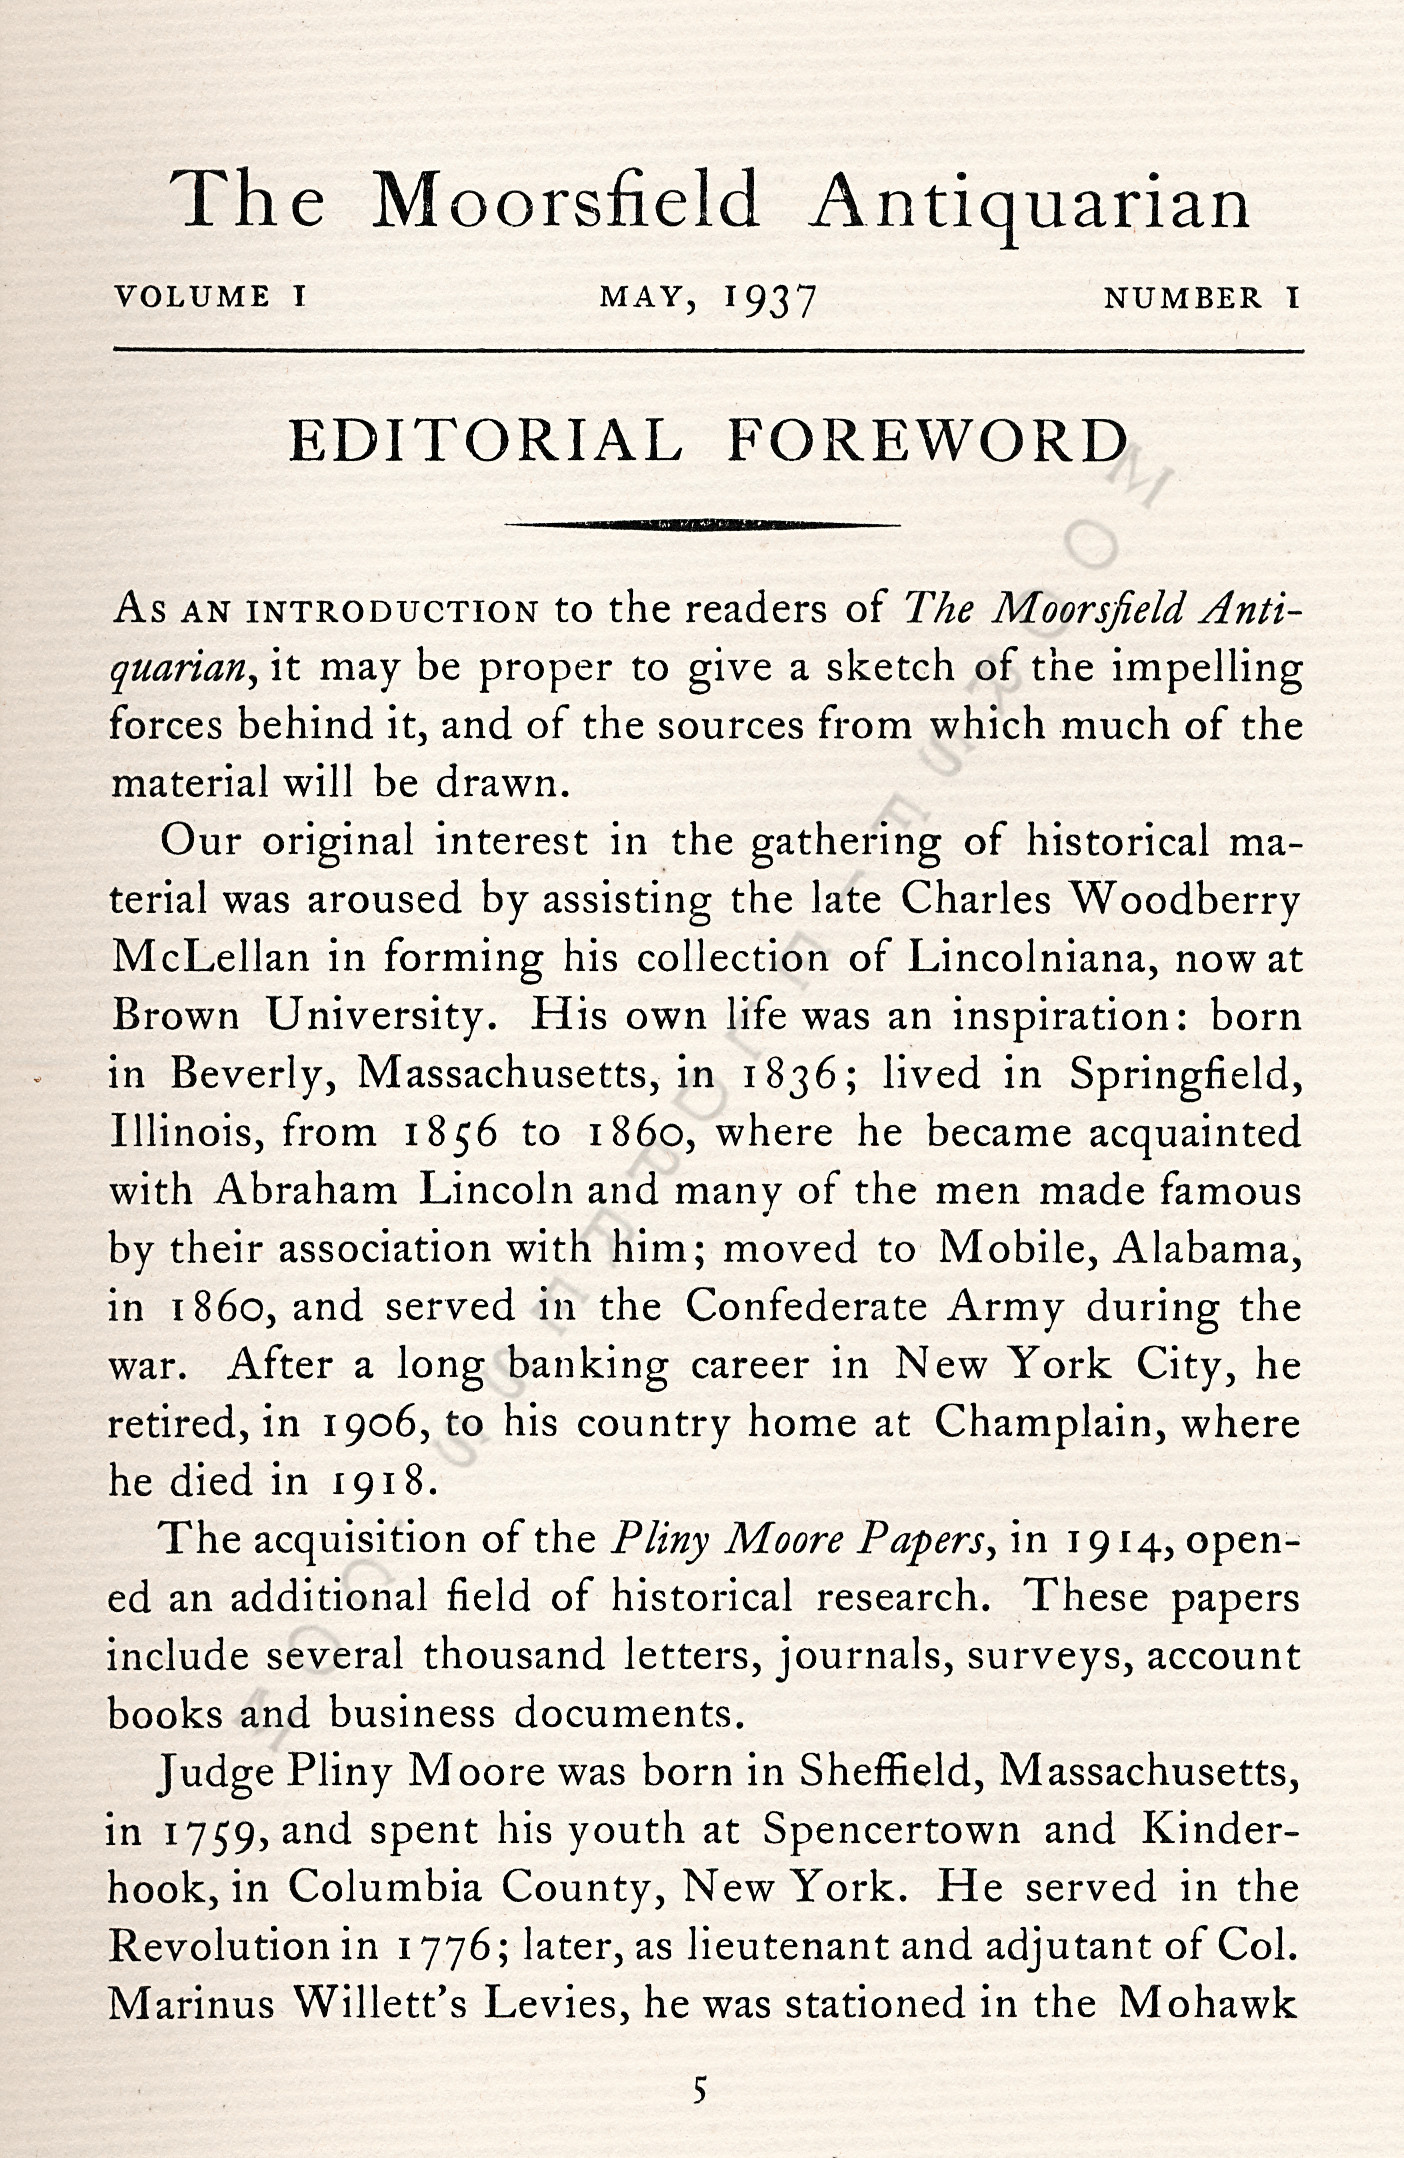 Editorial
                      Foreward by Hugh McLellan 1937